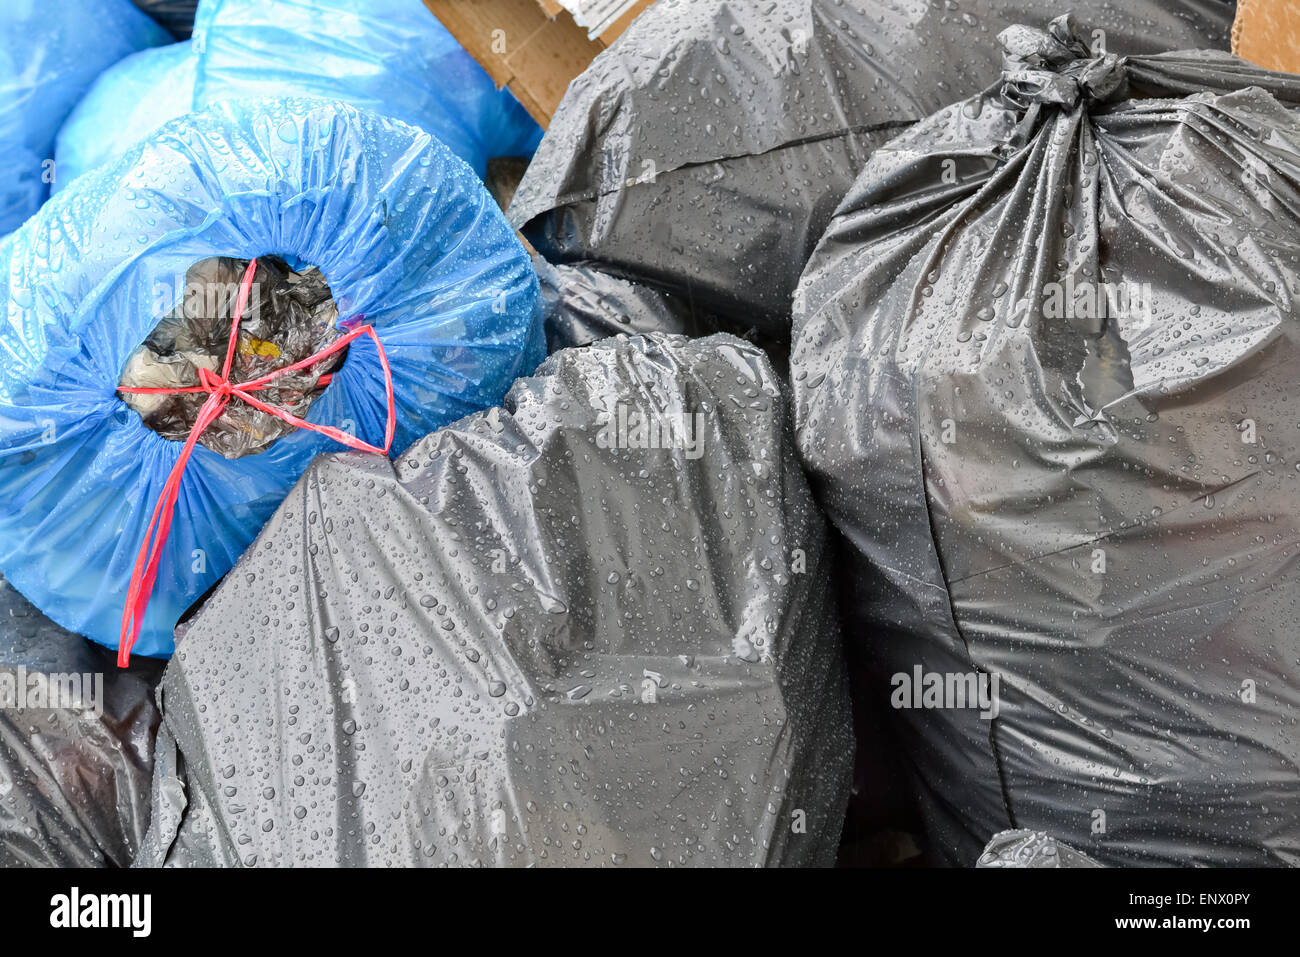 https://c8.alamy.com/comp/ENX0PY/pile-of-black-and-blue-plastic-trash-bags-full-of-garbage-ENX0PY.jpg